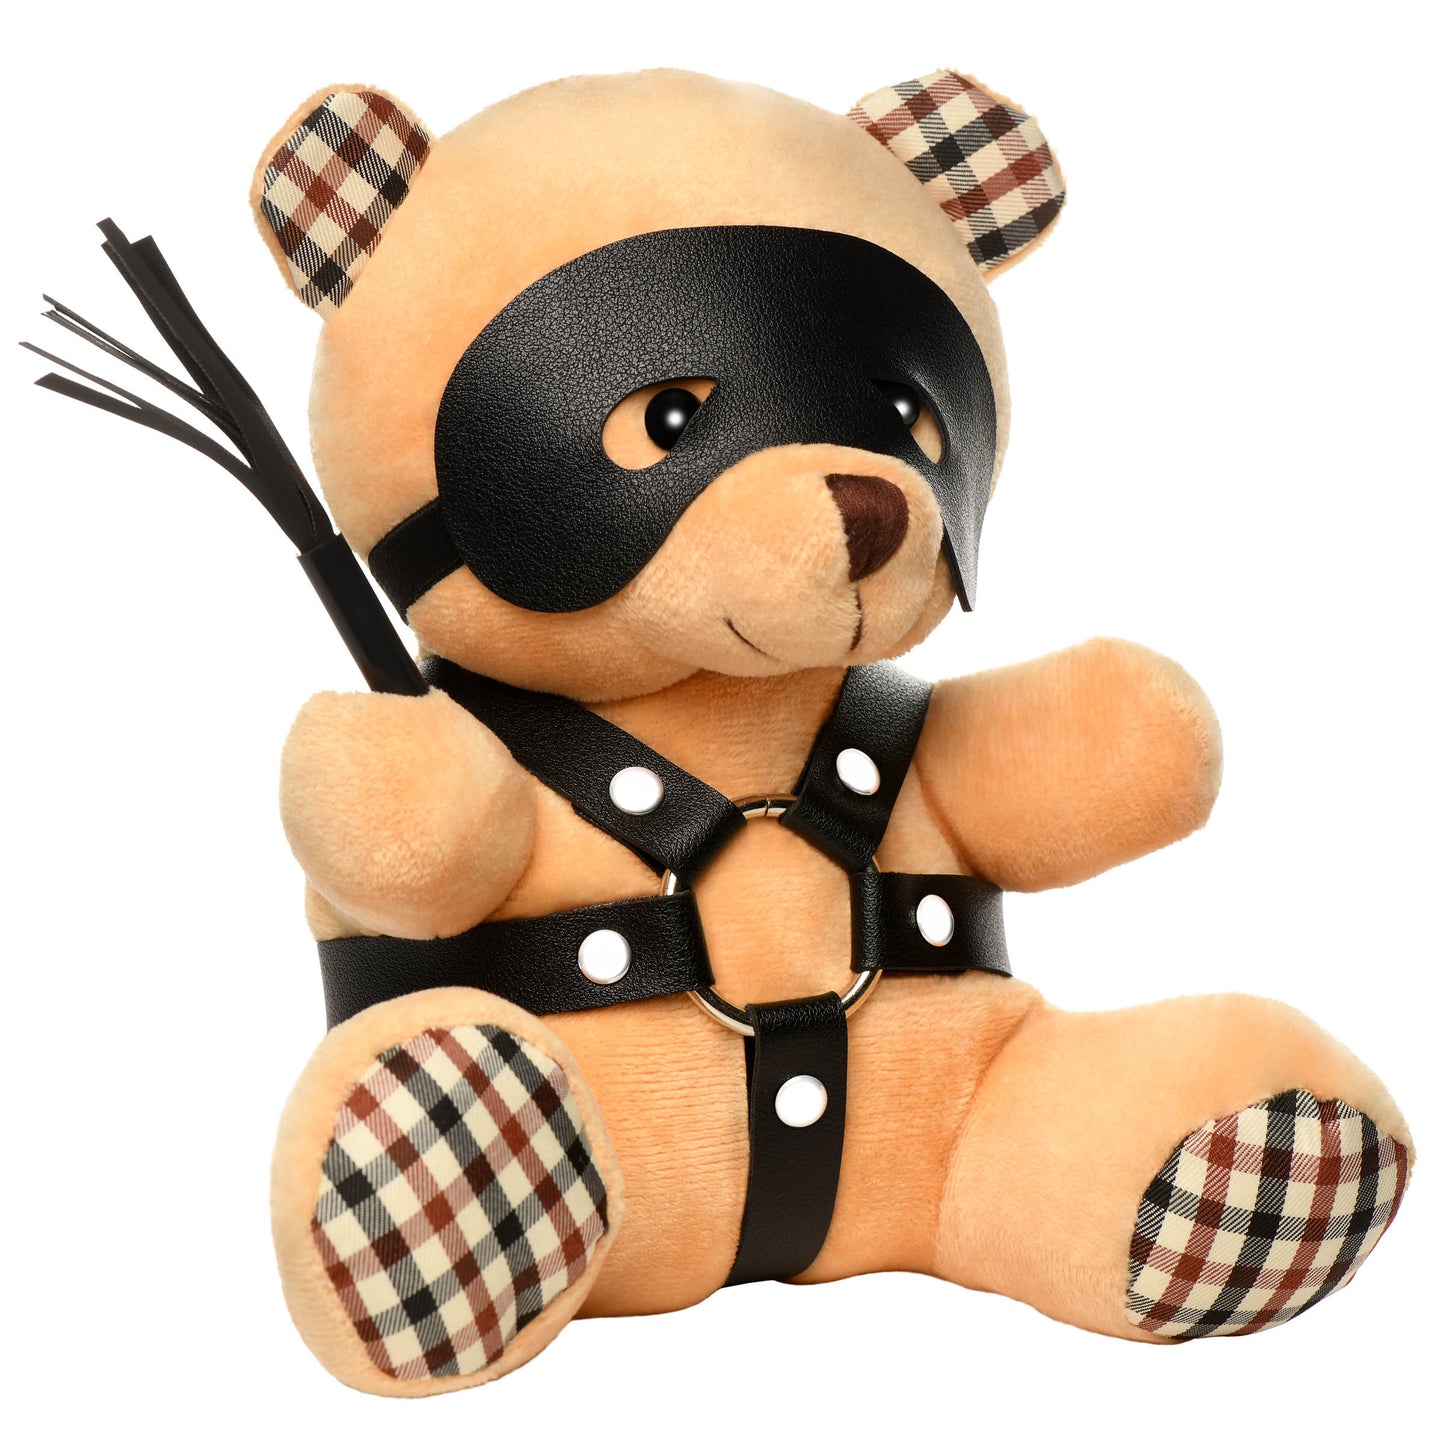 Master Series BDSM Teddy Bear